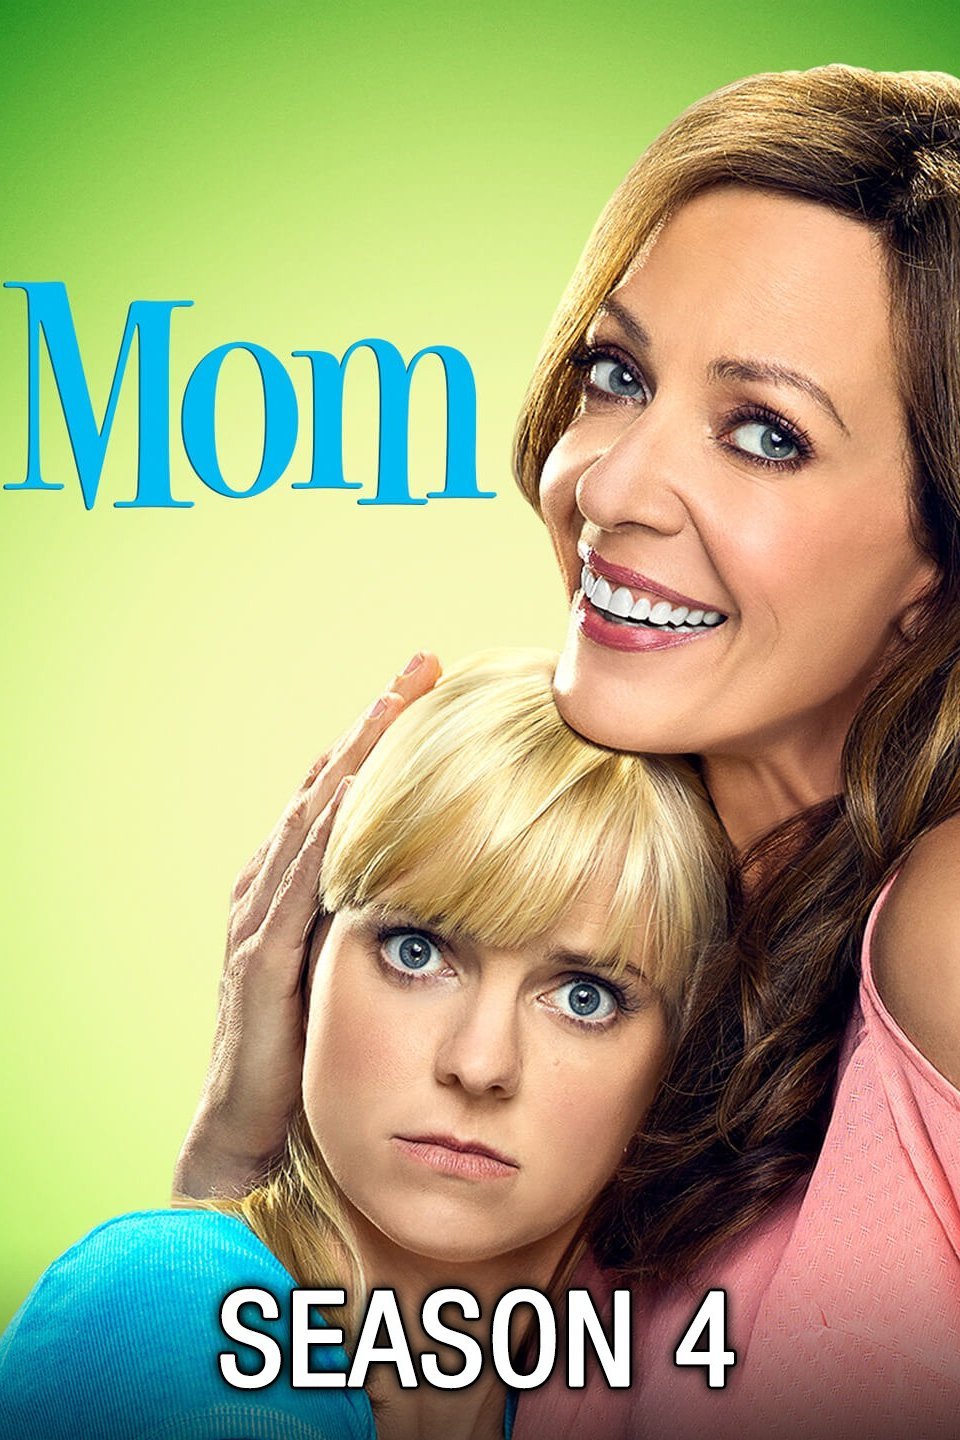 mom movie review behindwoods